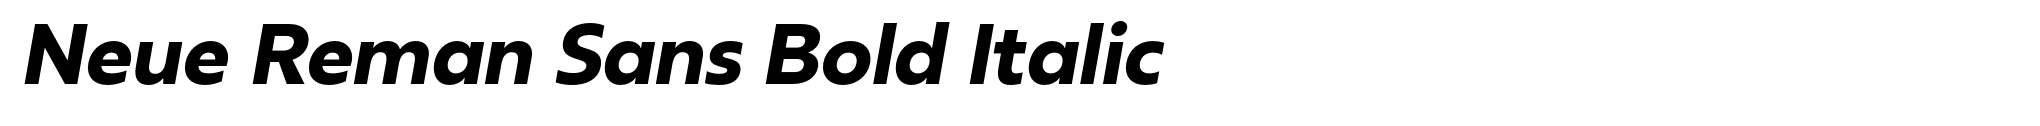 Neue Reman Sans Bold Italic image